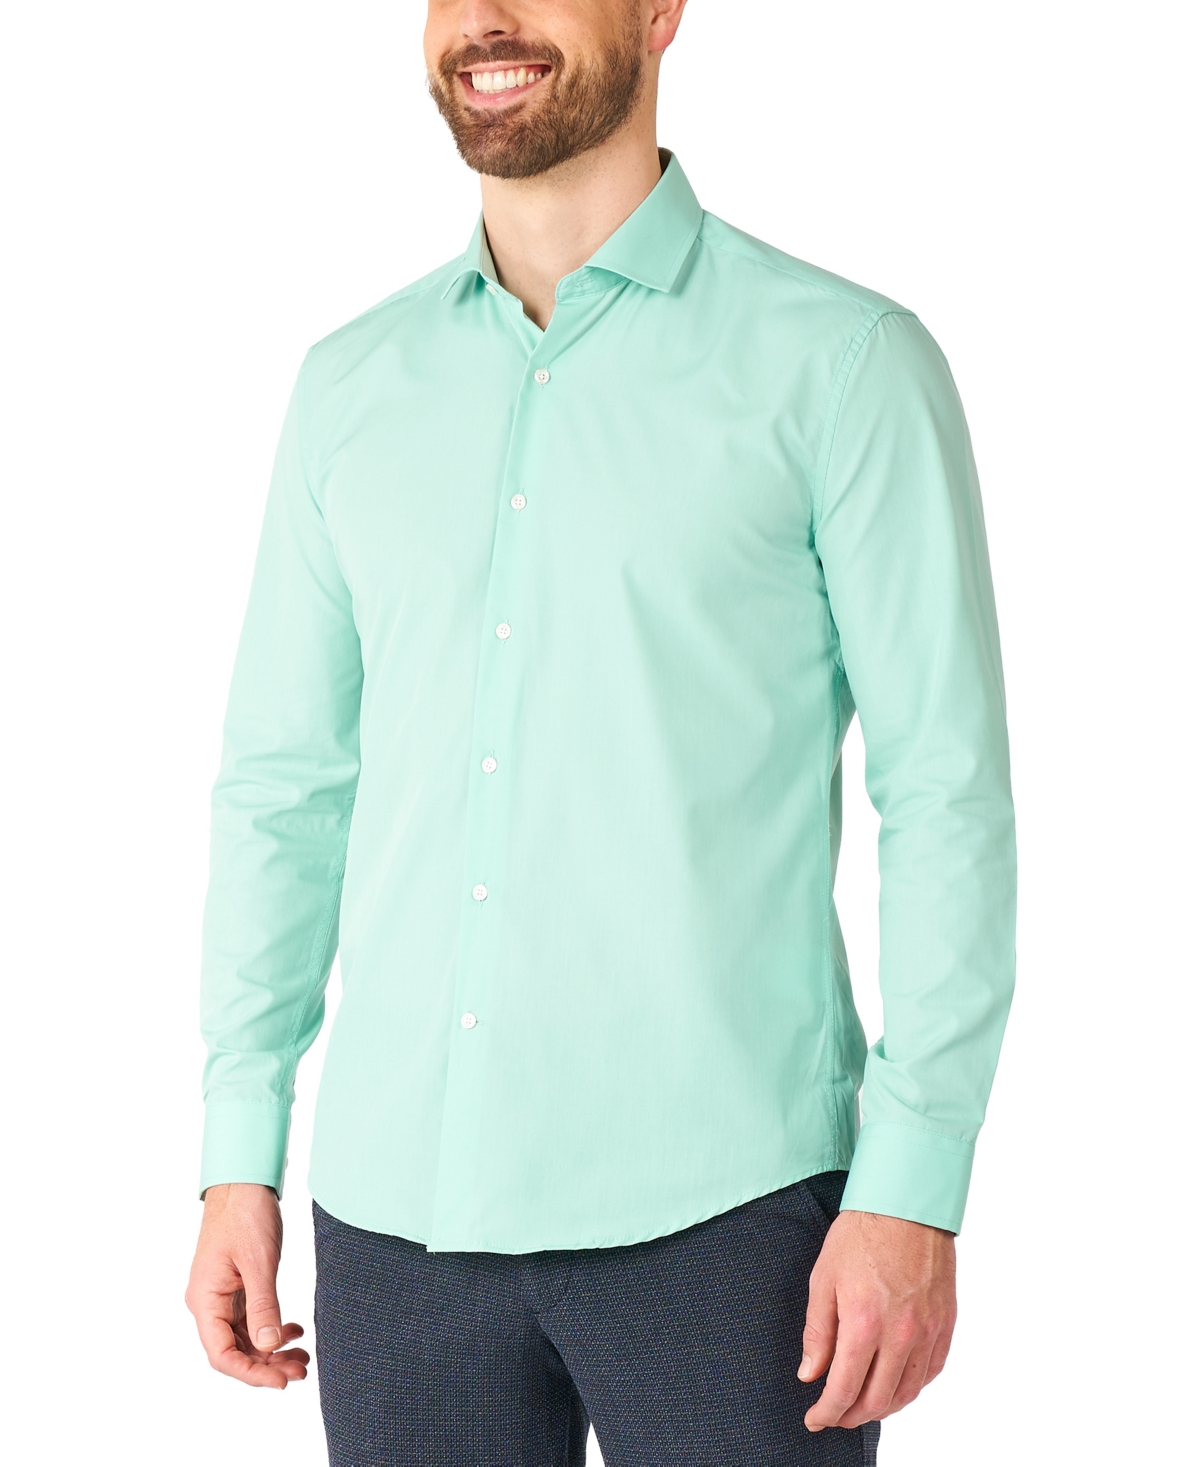 Men's Long-Sleeve Magic Mint Solid Shirt - Teal/mint